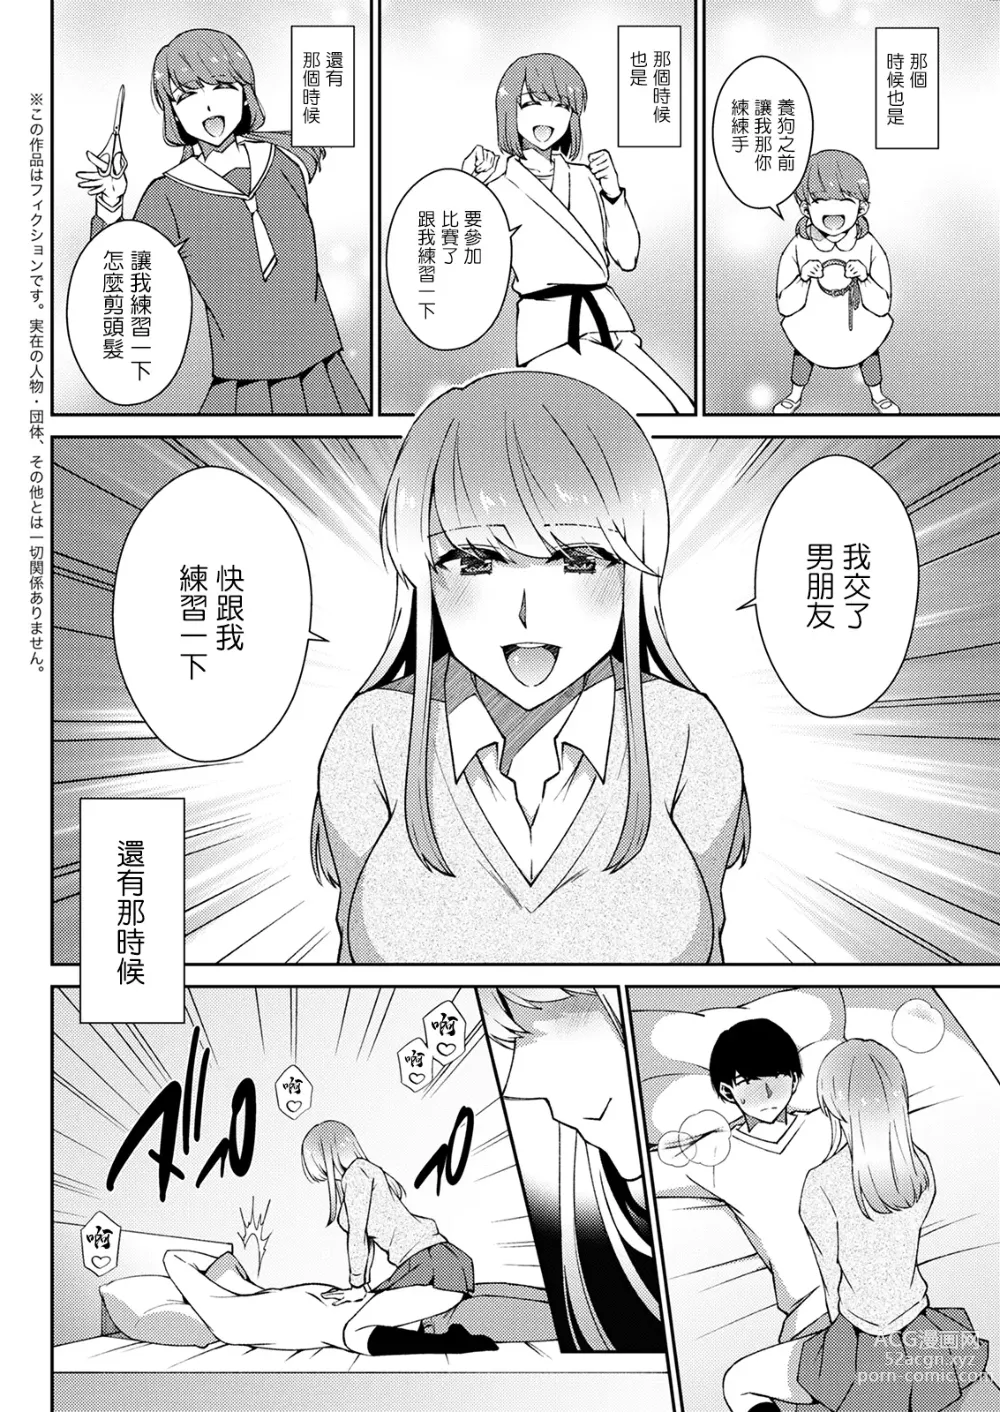 Page 4 of manga Koi no Wazurai